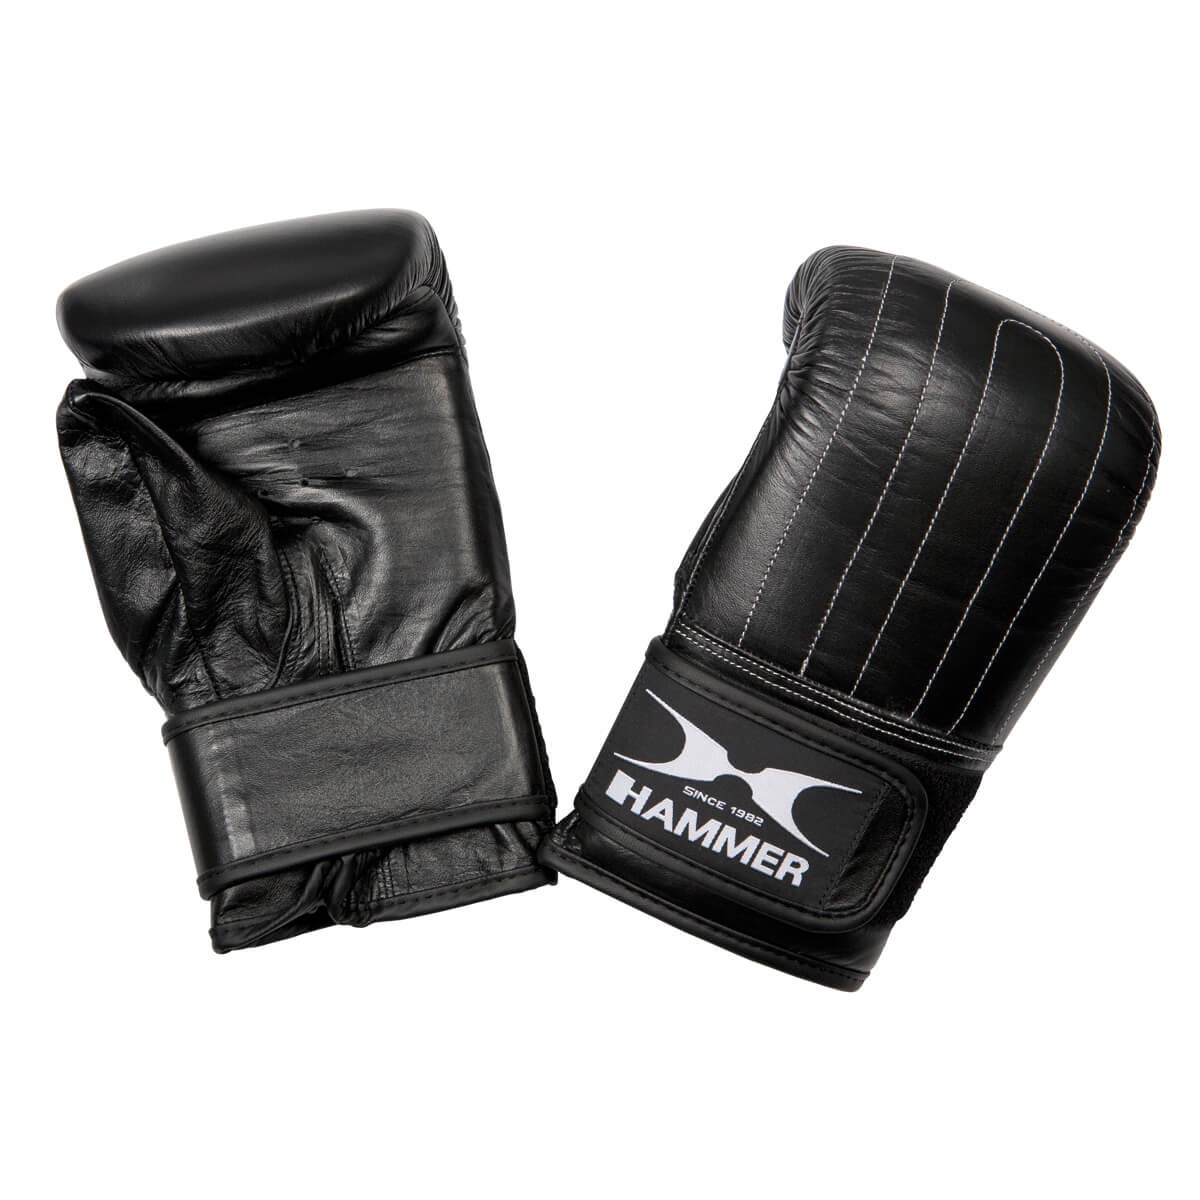 Buy HAMMER BOXING punching bag gloves PUNCH